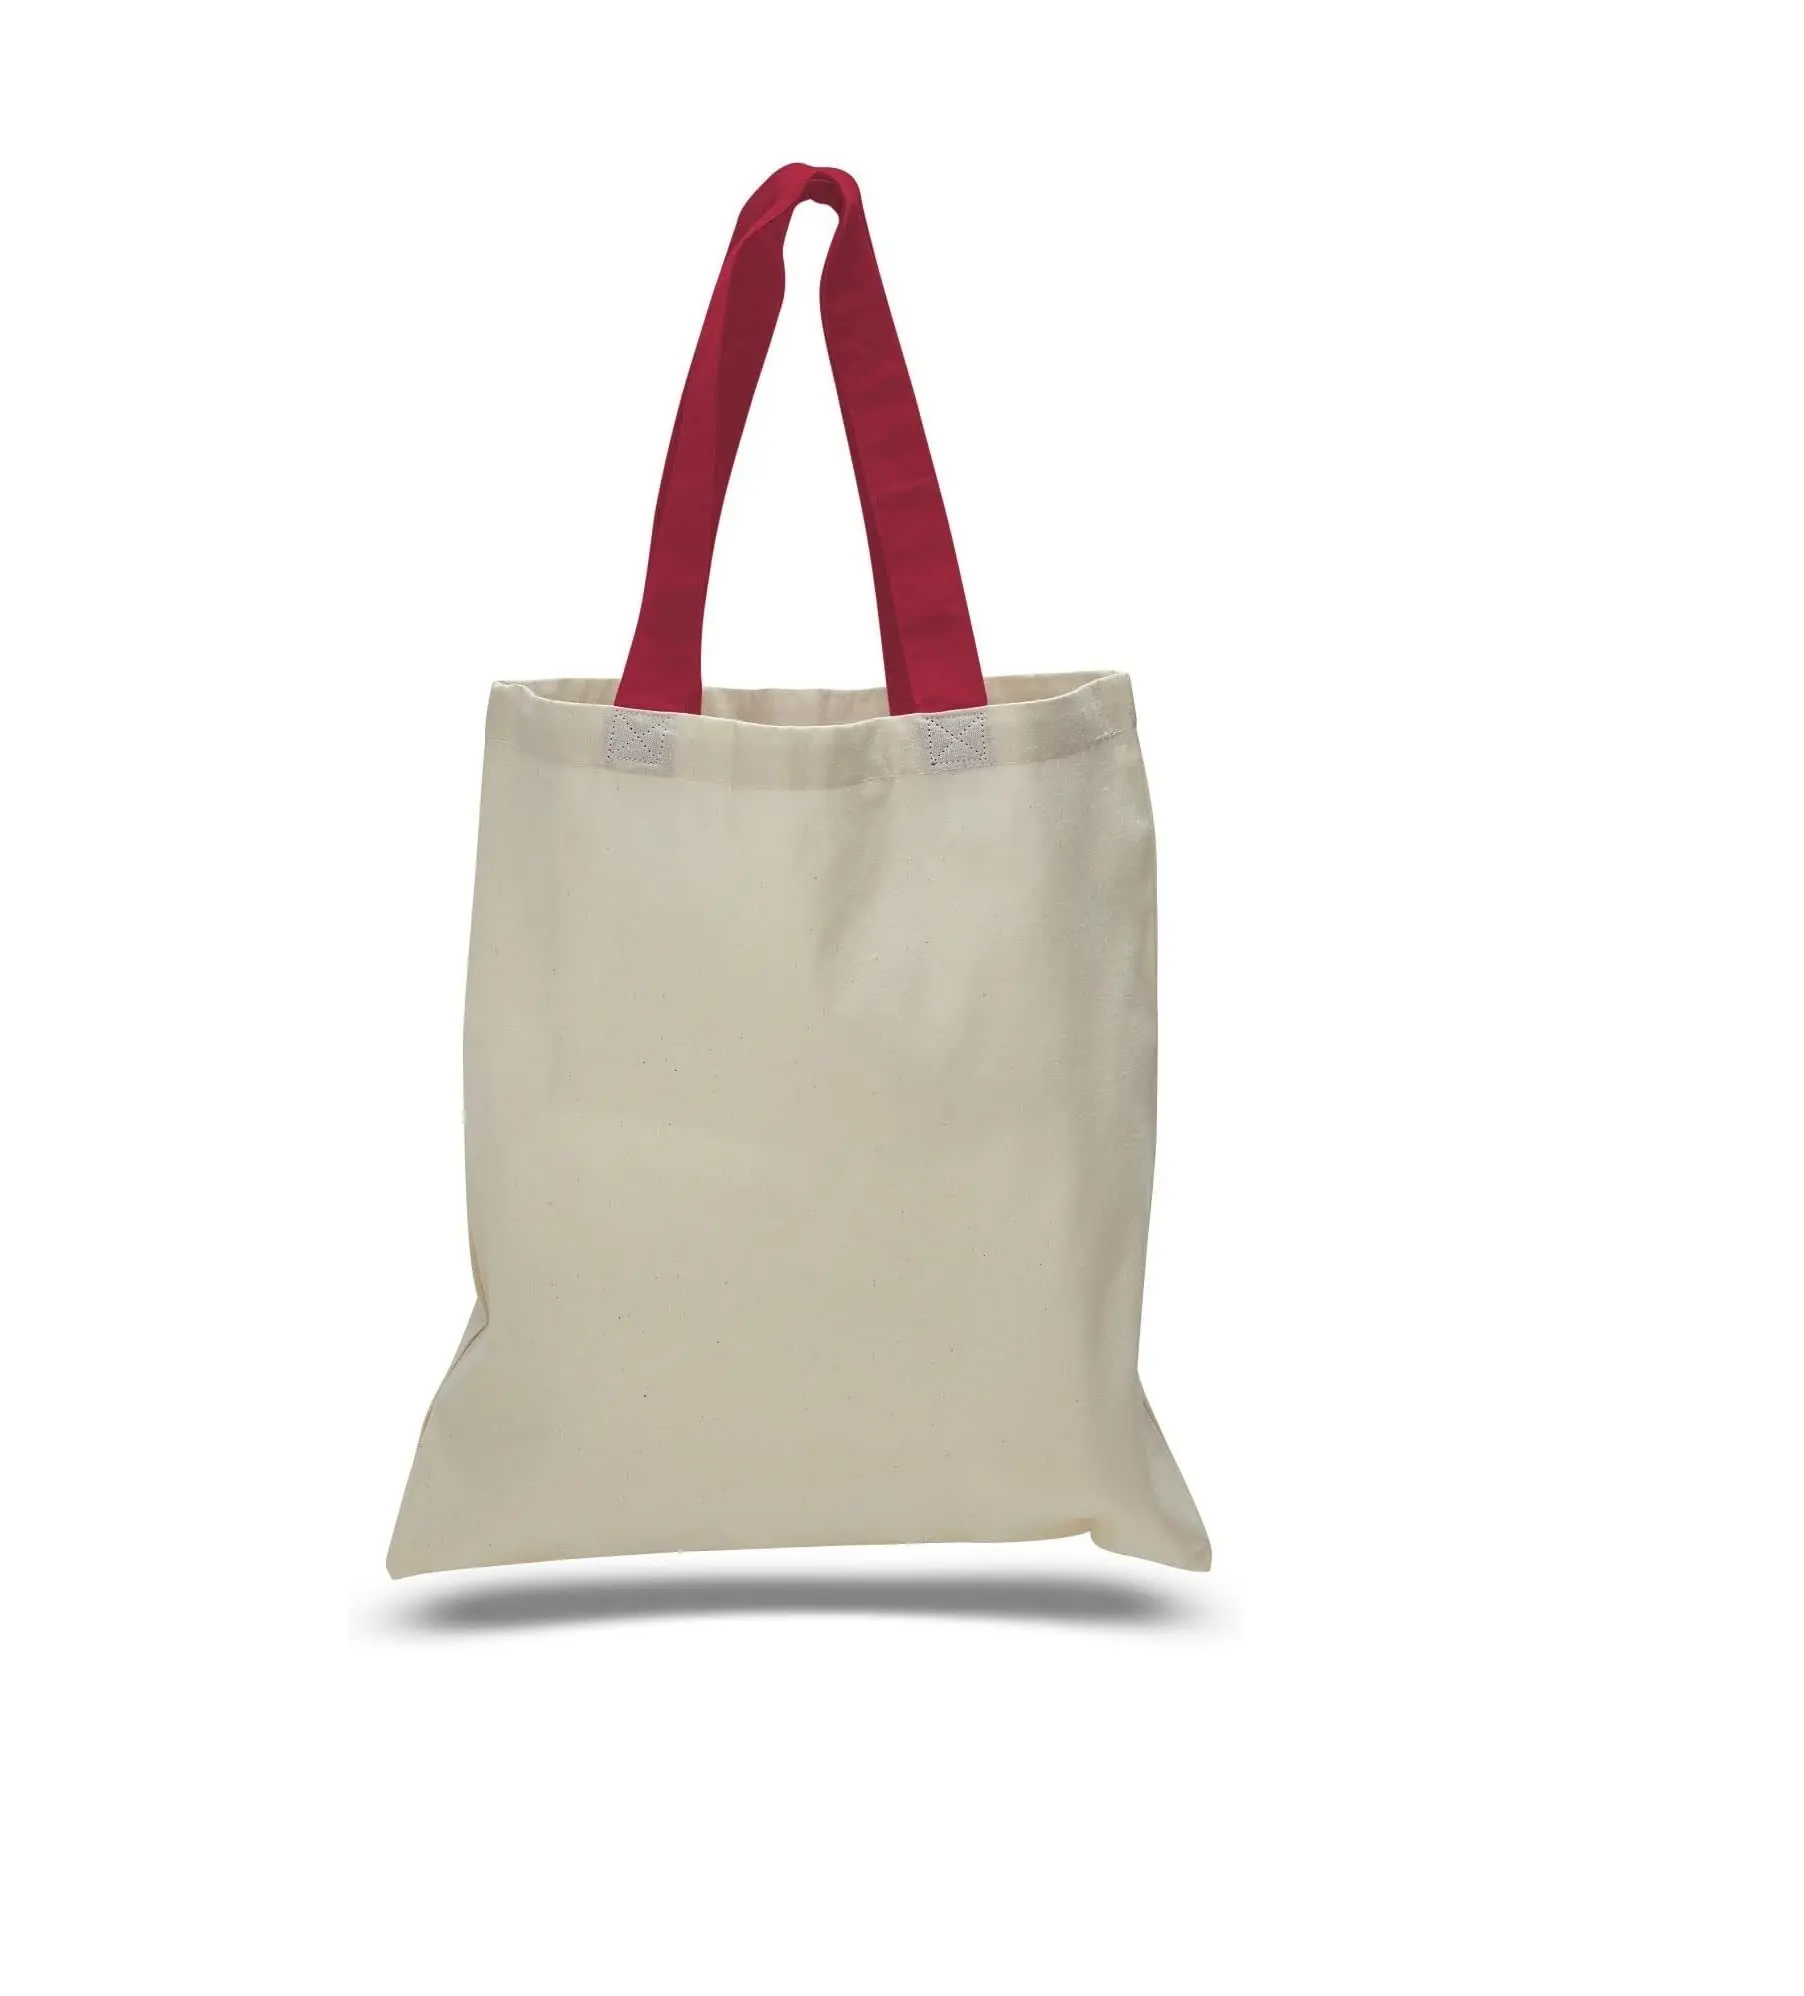 Cheap price Tote Handbag Ladies Shoulder Working Shopping Tote Bag